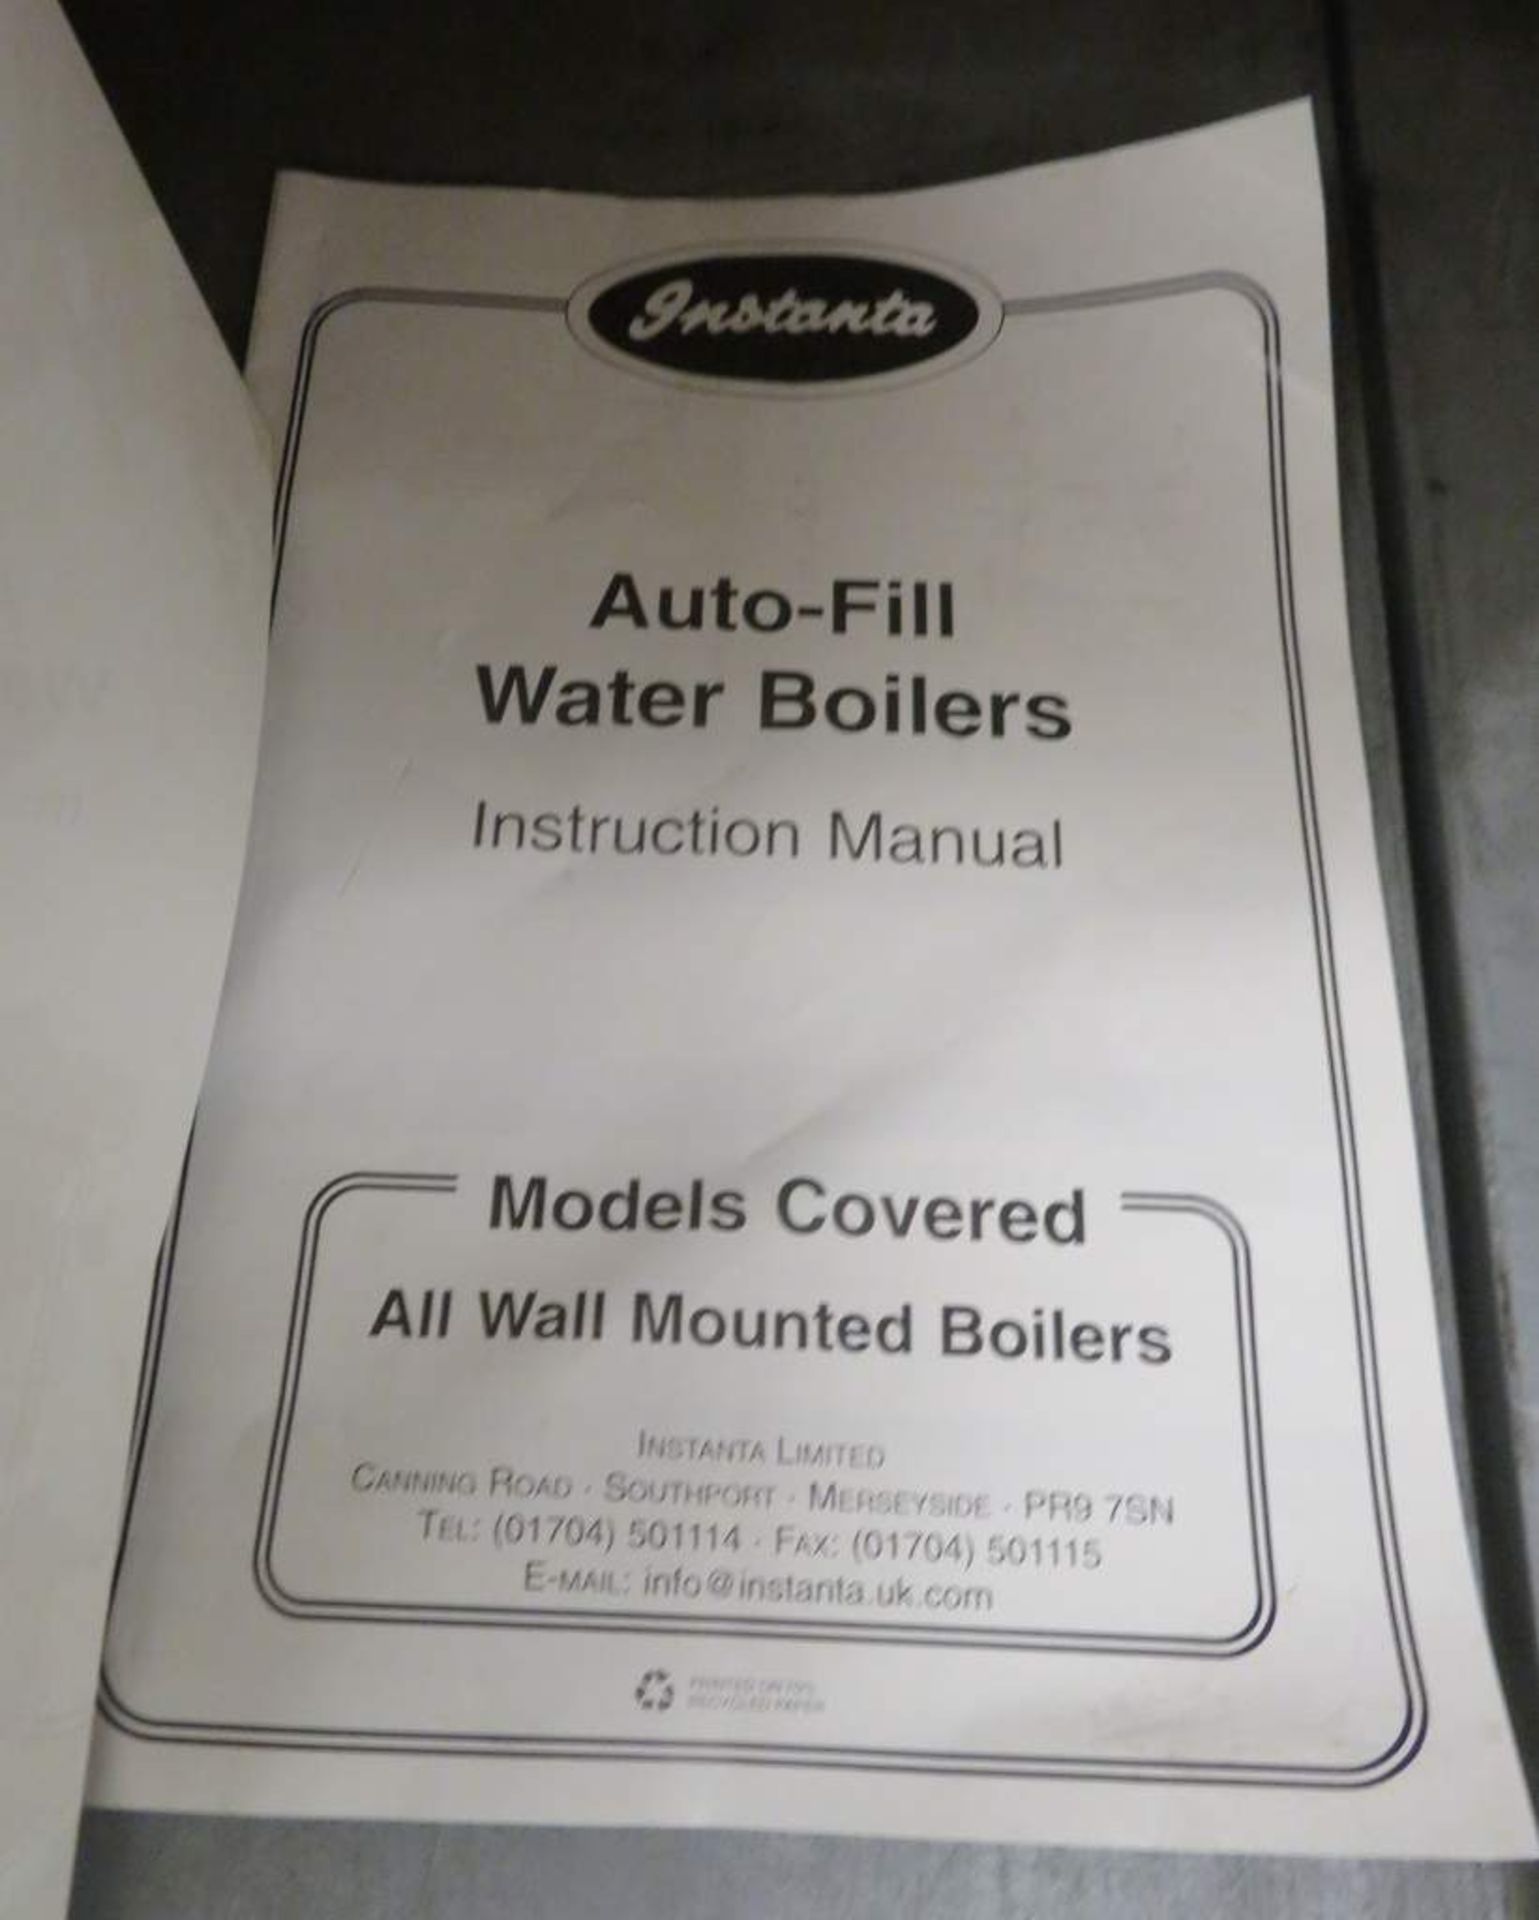 Instanta LTD, WM3, Auto-Fill Water Boilers - Image 4 of 5